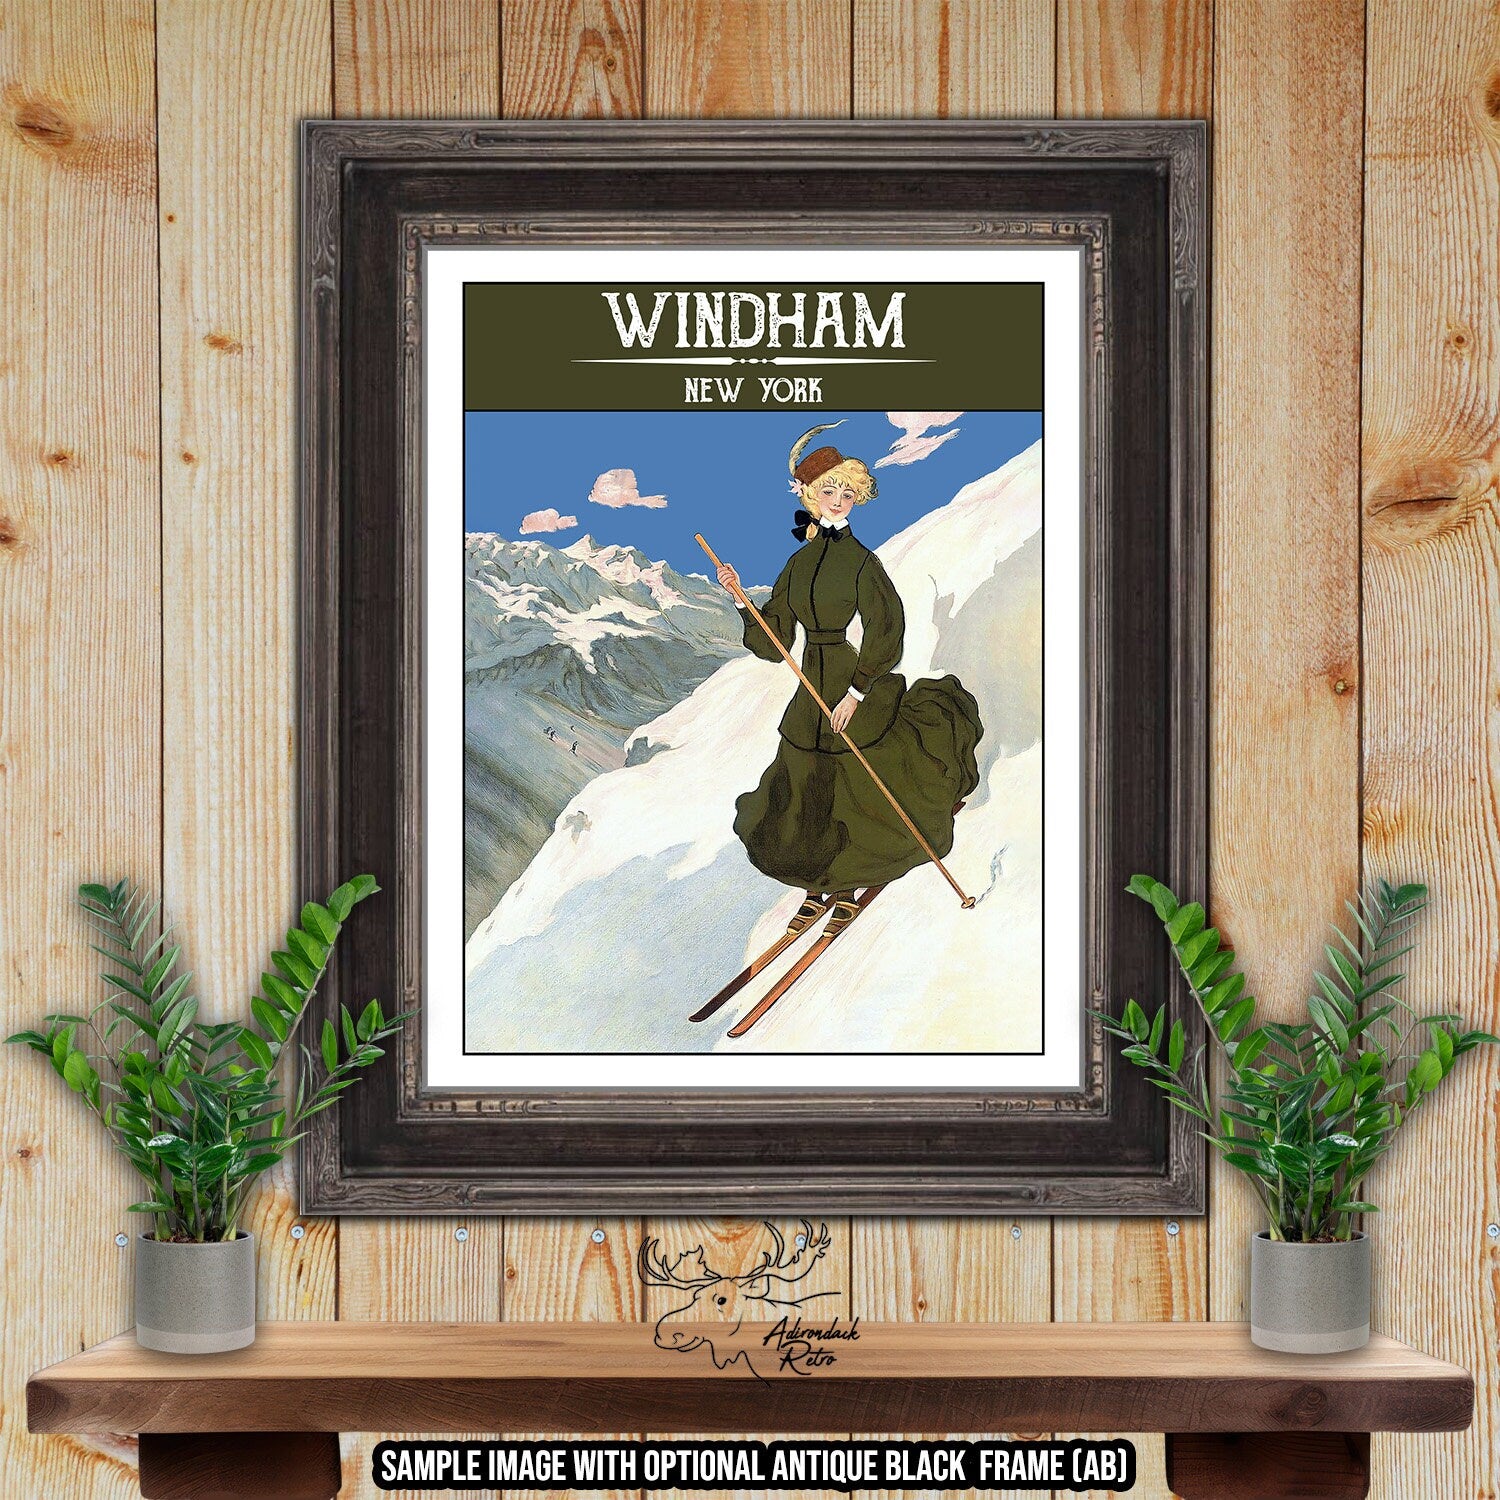 Windham New York Retro Ski Resort Print at Adirondack Retro